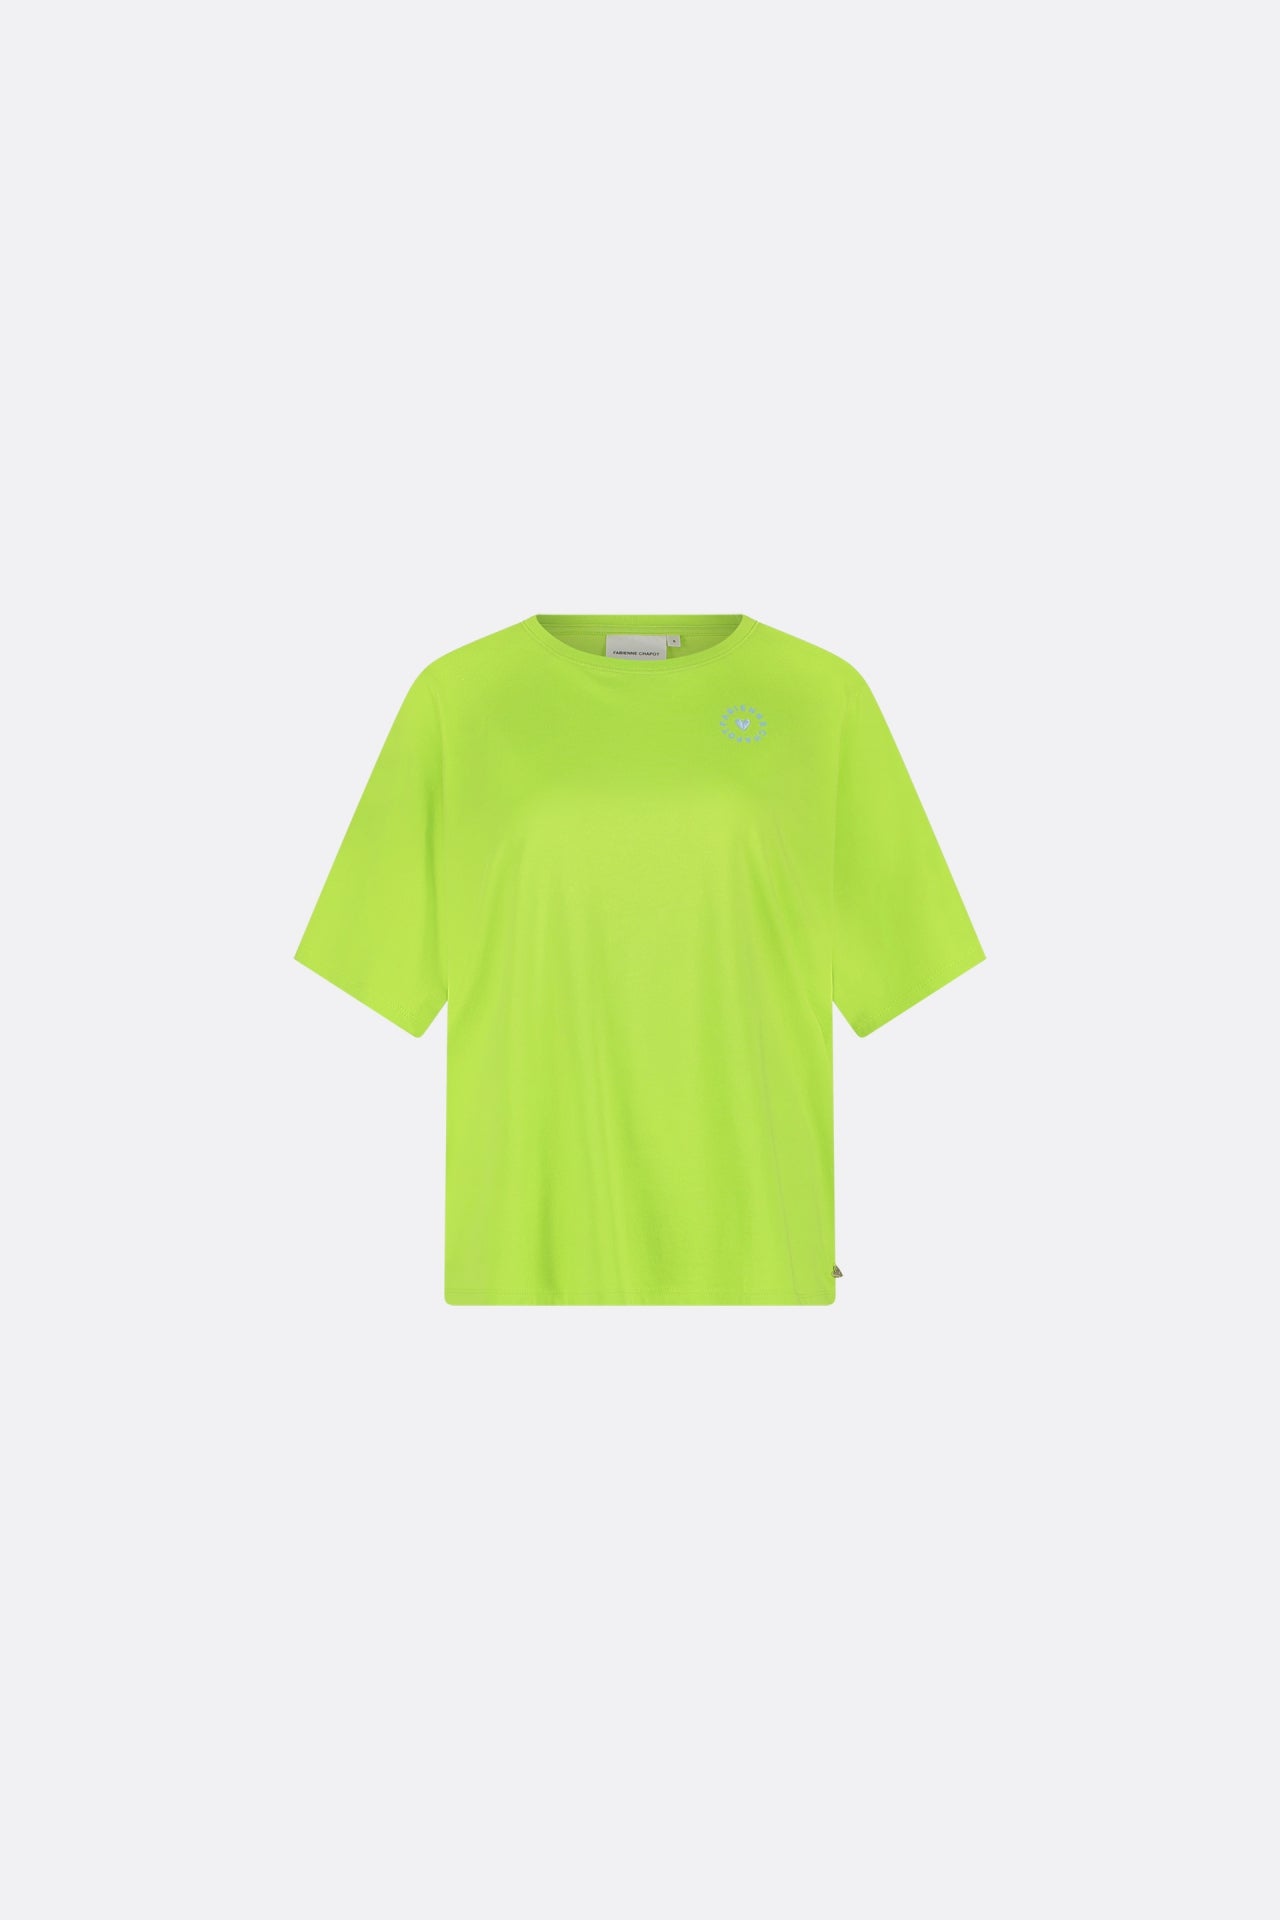 Fay Chapot Lime T-shirt | Juicy Lime